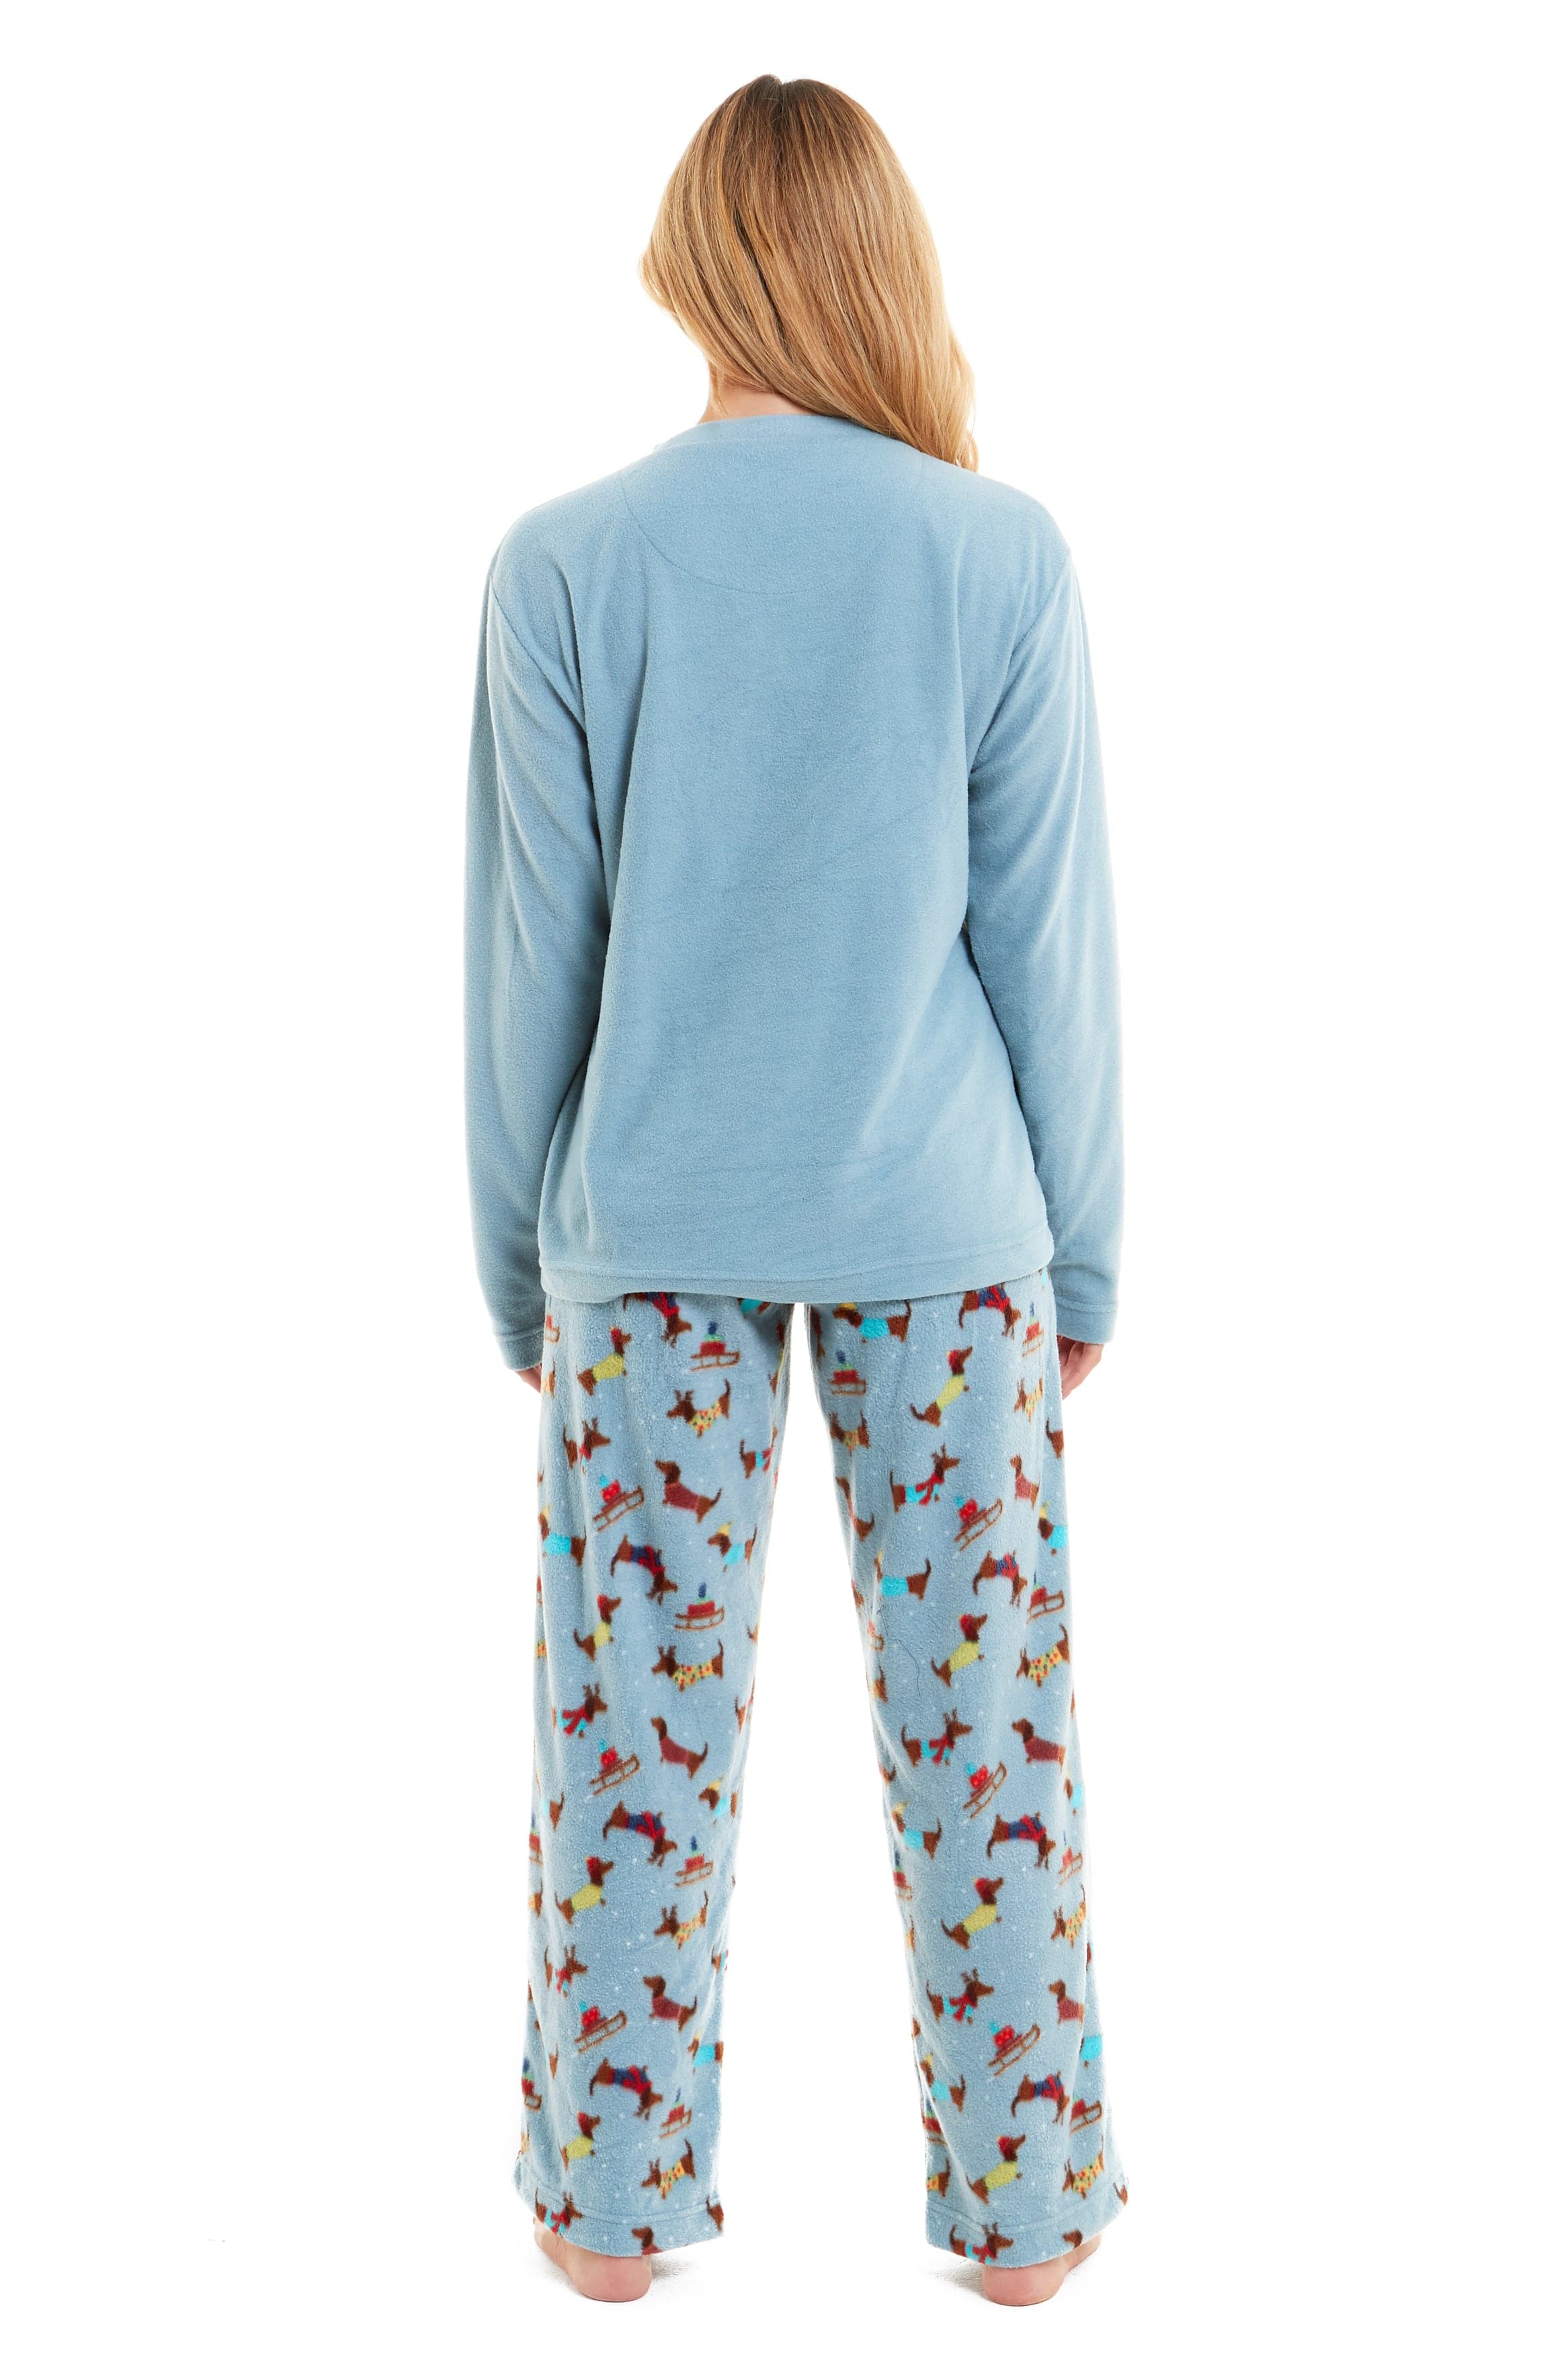 Ladies Check Christmas Fleece Lounge Pants, Wholesale Pyjamas, Wholesale  Mens Pyjamas, A&K Hosiery